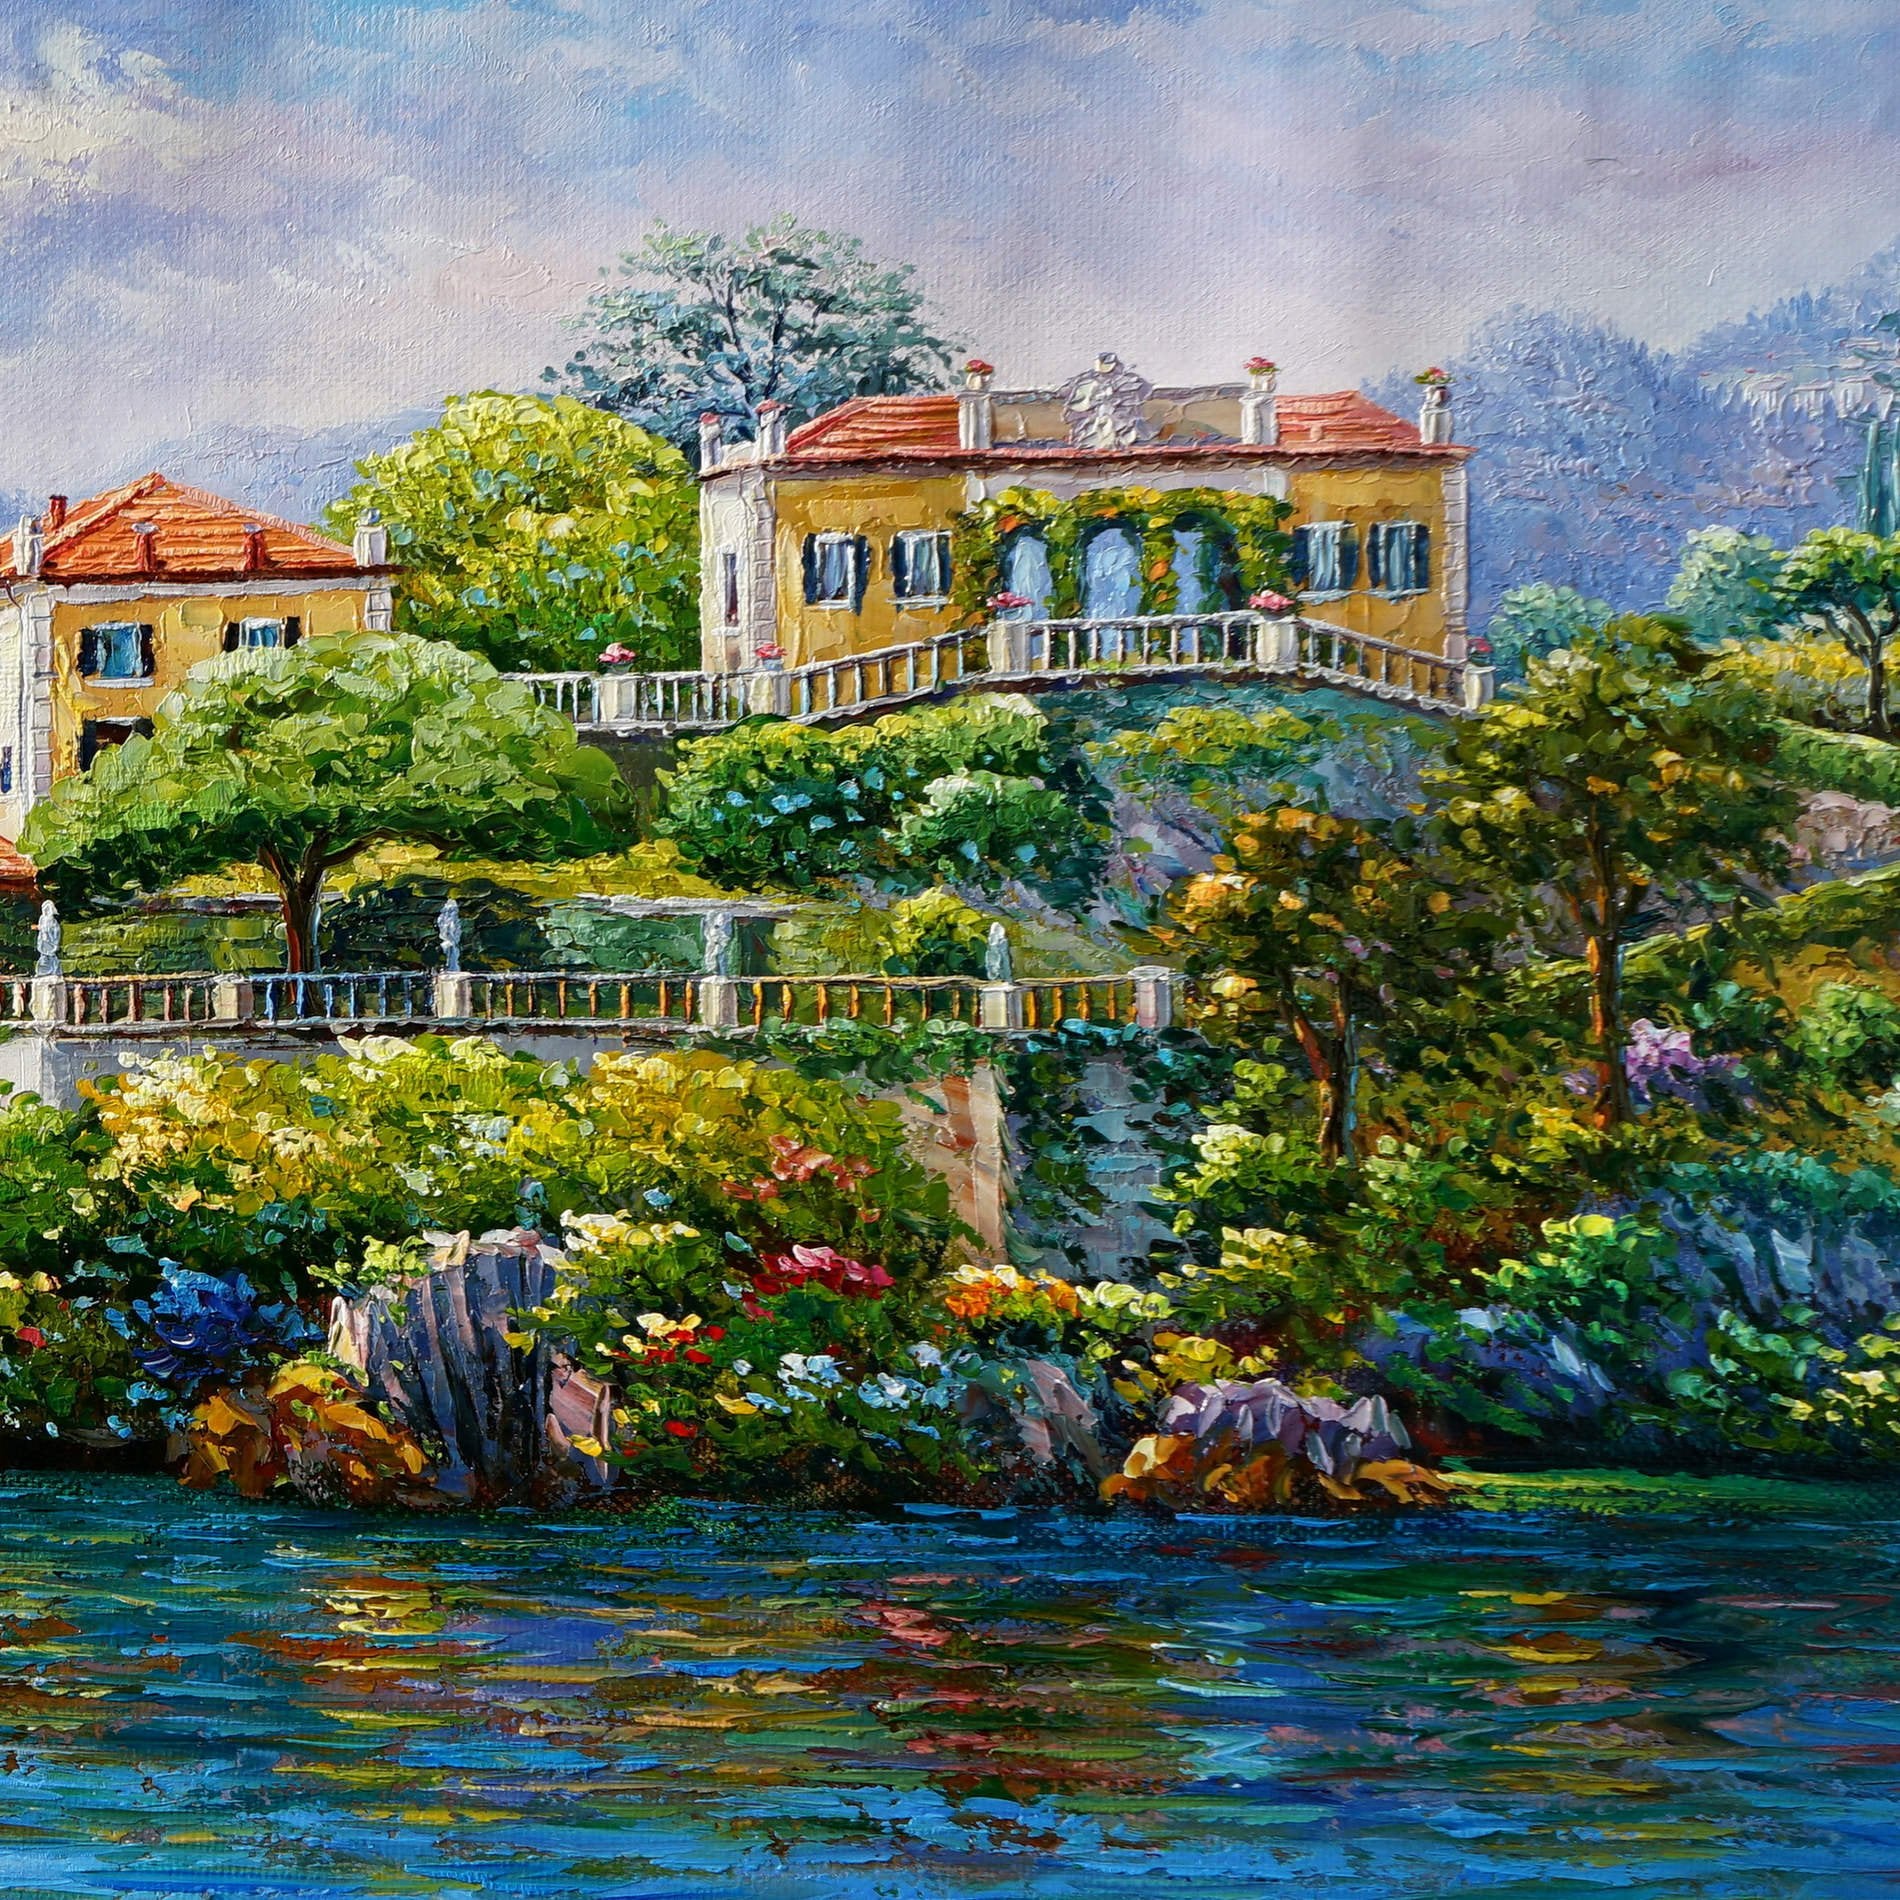 Hand painted Villa Balbianello Lake Como 60x120cm